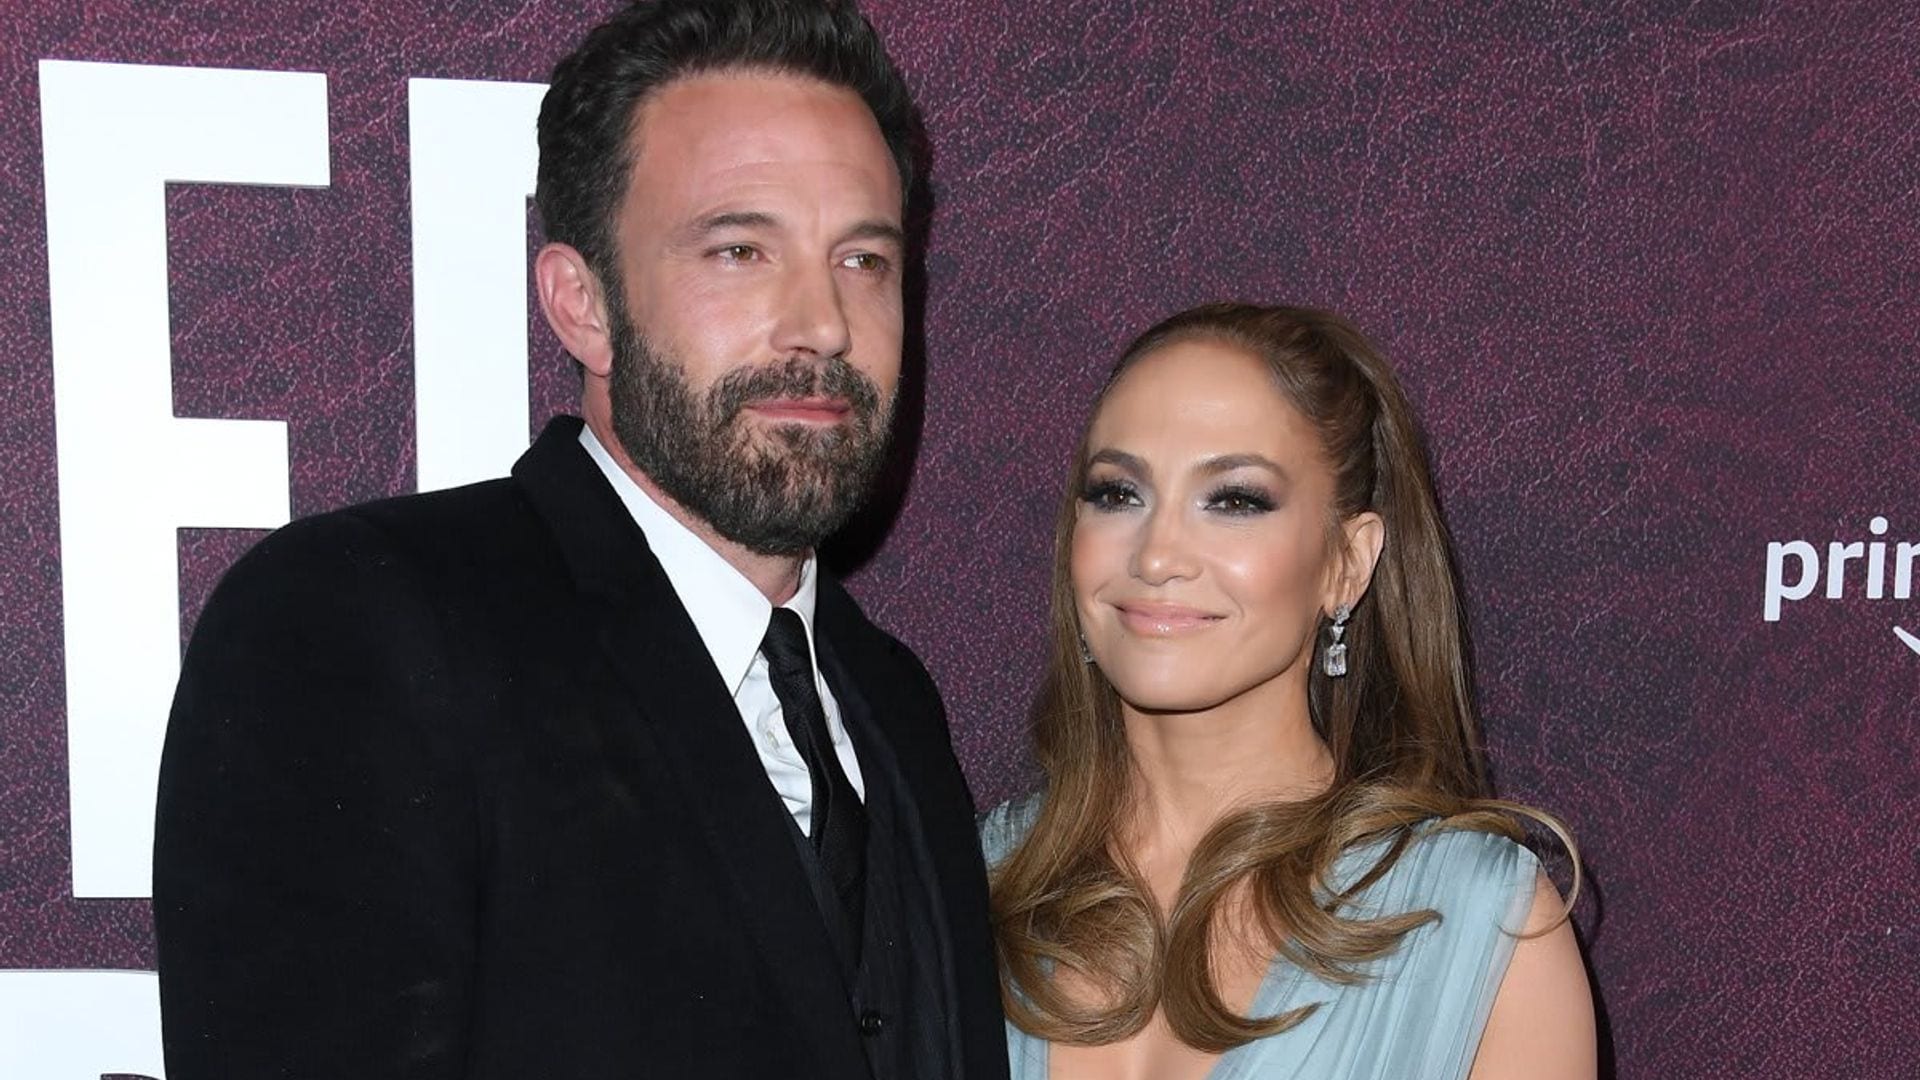 Why Ben Affleck was hesitant to rekindle romance with Jennifer Lopez